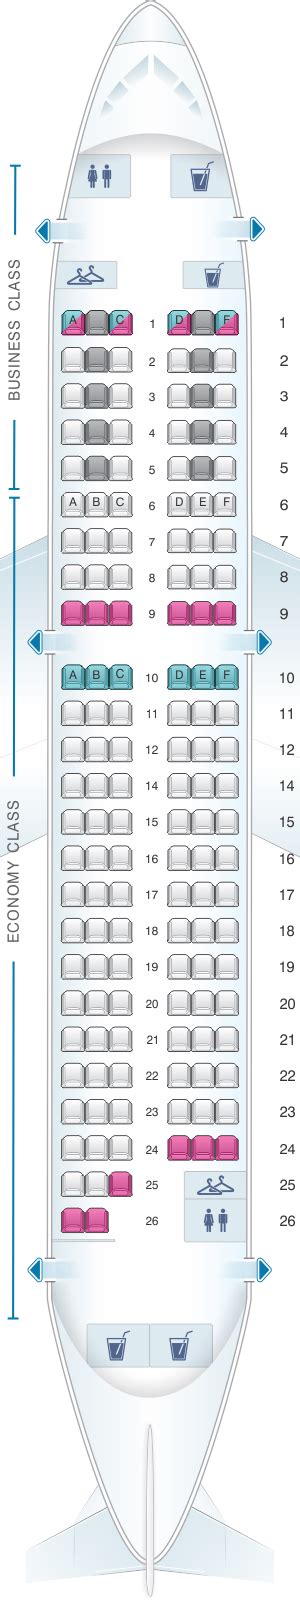 Air France A350 Business Class Seat Map Nannette Cordero